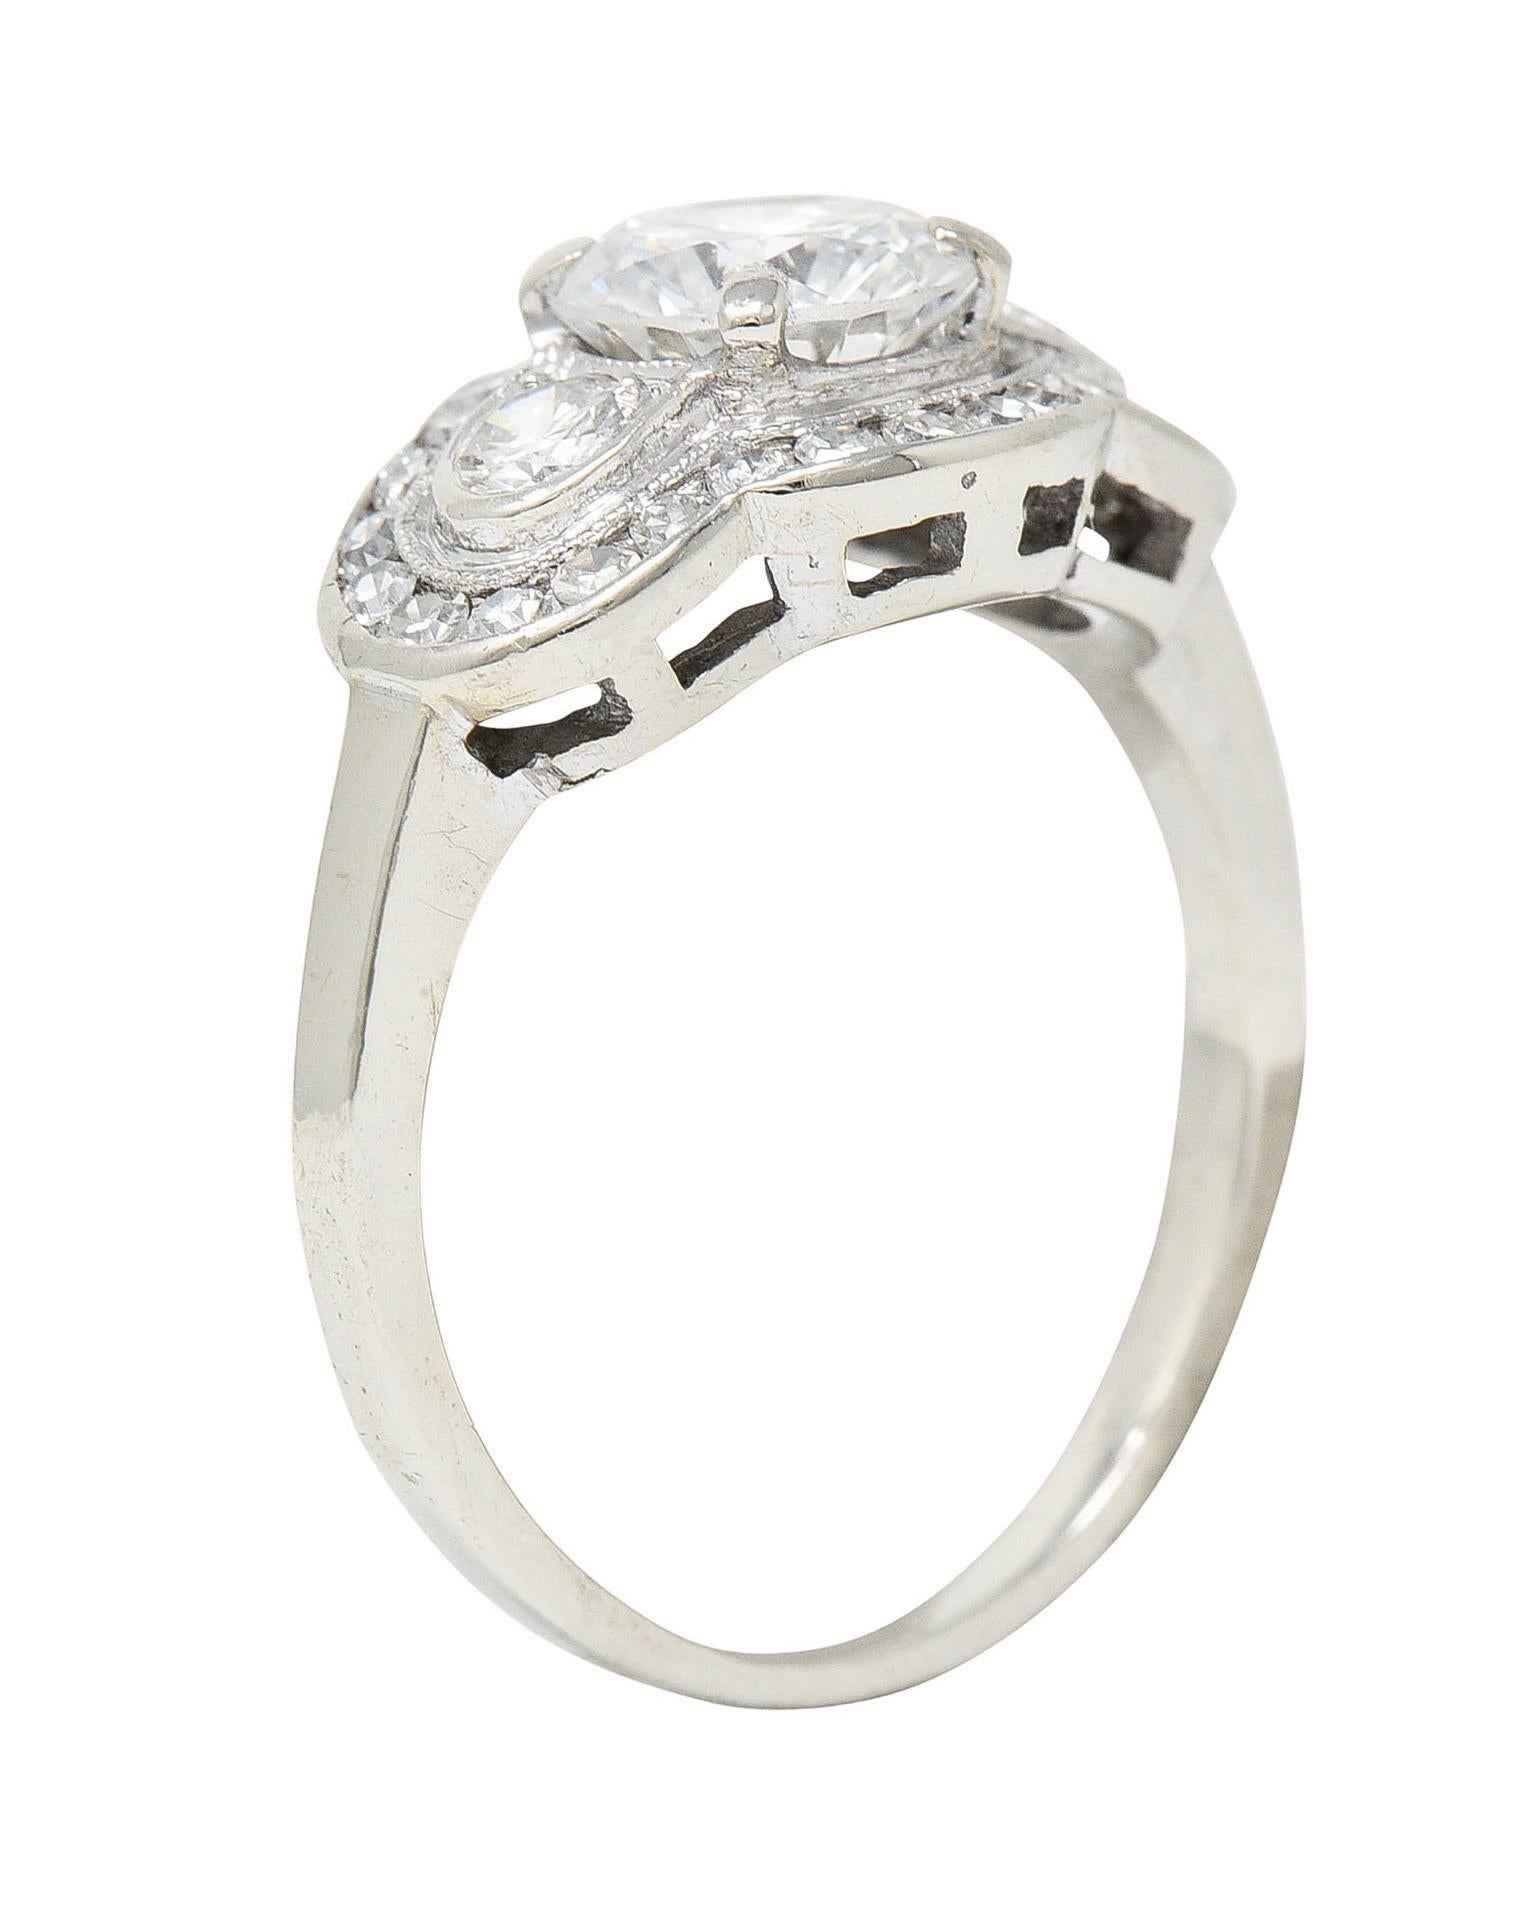 1950's Mid-Century 1.65 Carats Diamond 14 Karat White Gold Engagement Ring For Sale 1